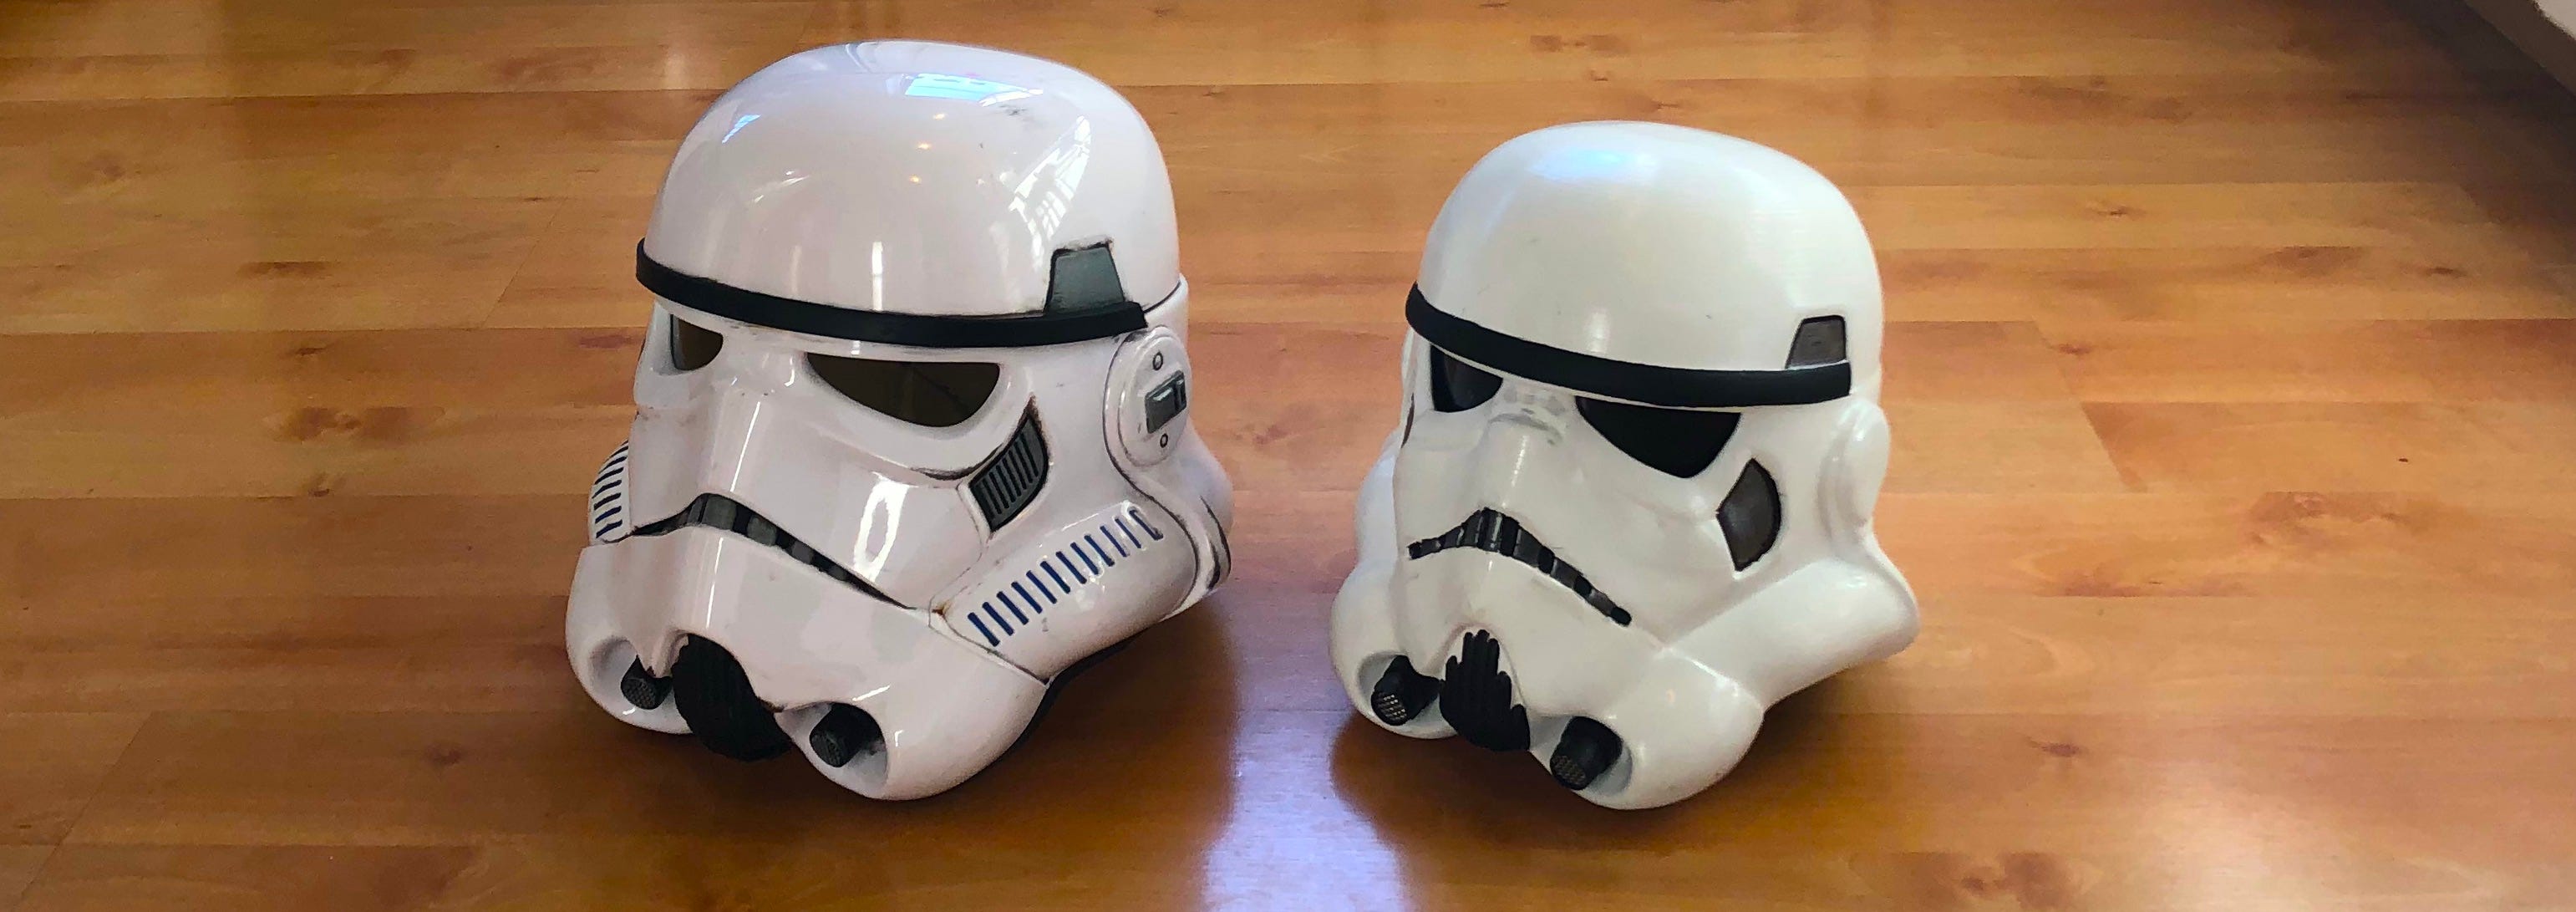 How to create a child-sized Stormtrooper helmet | Medium